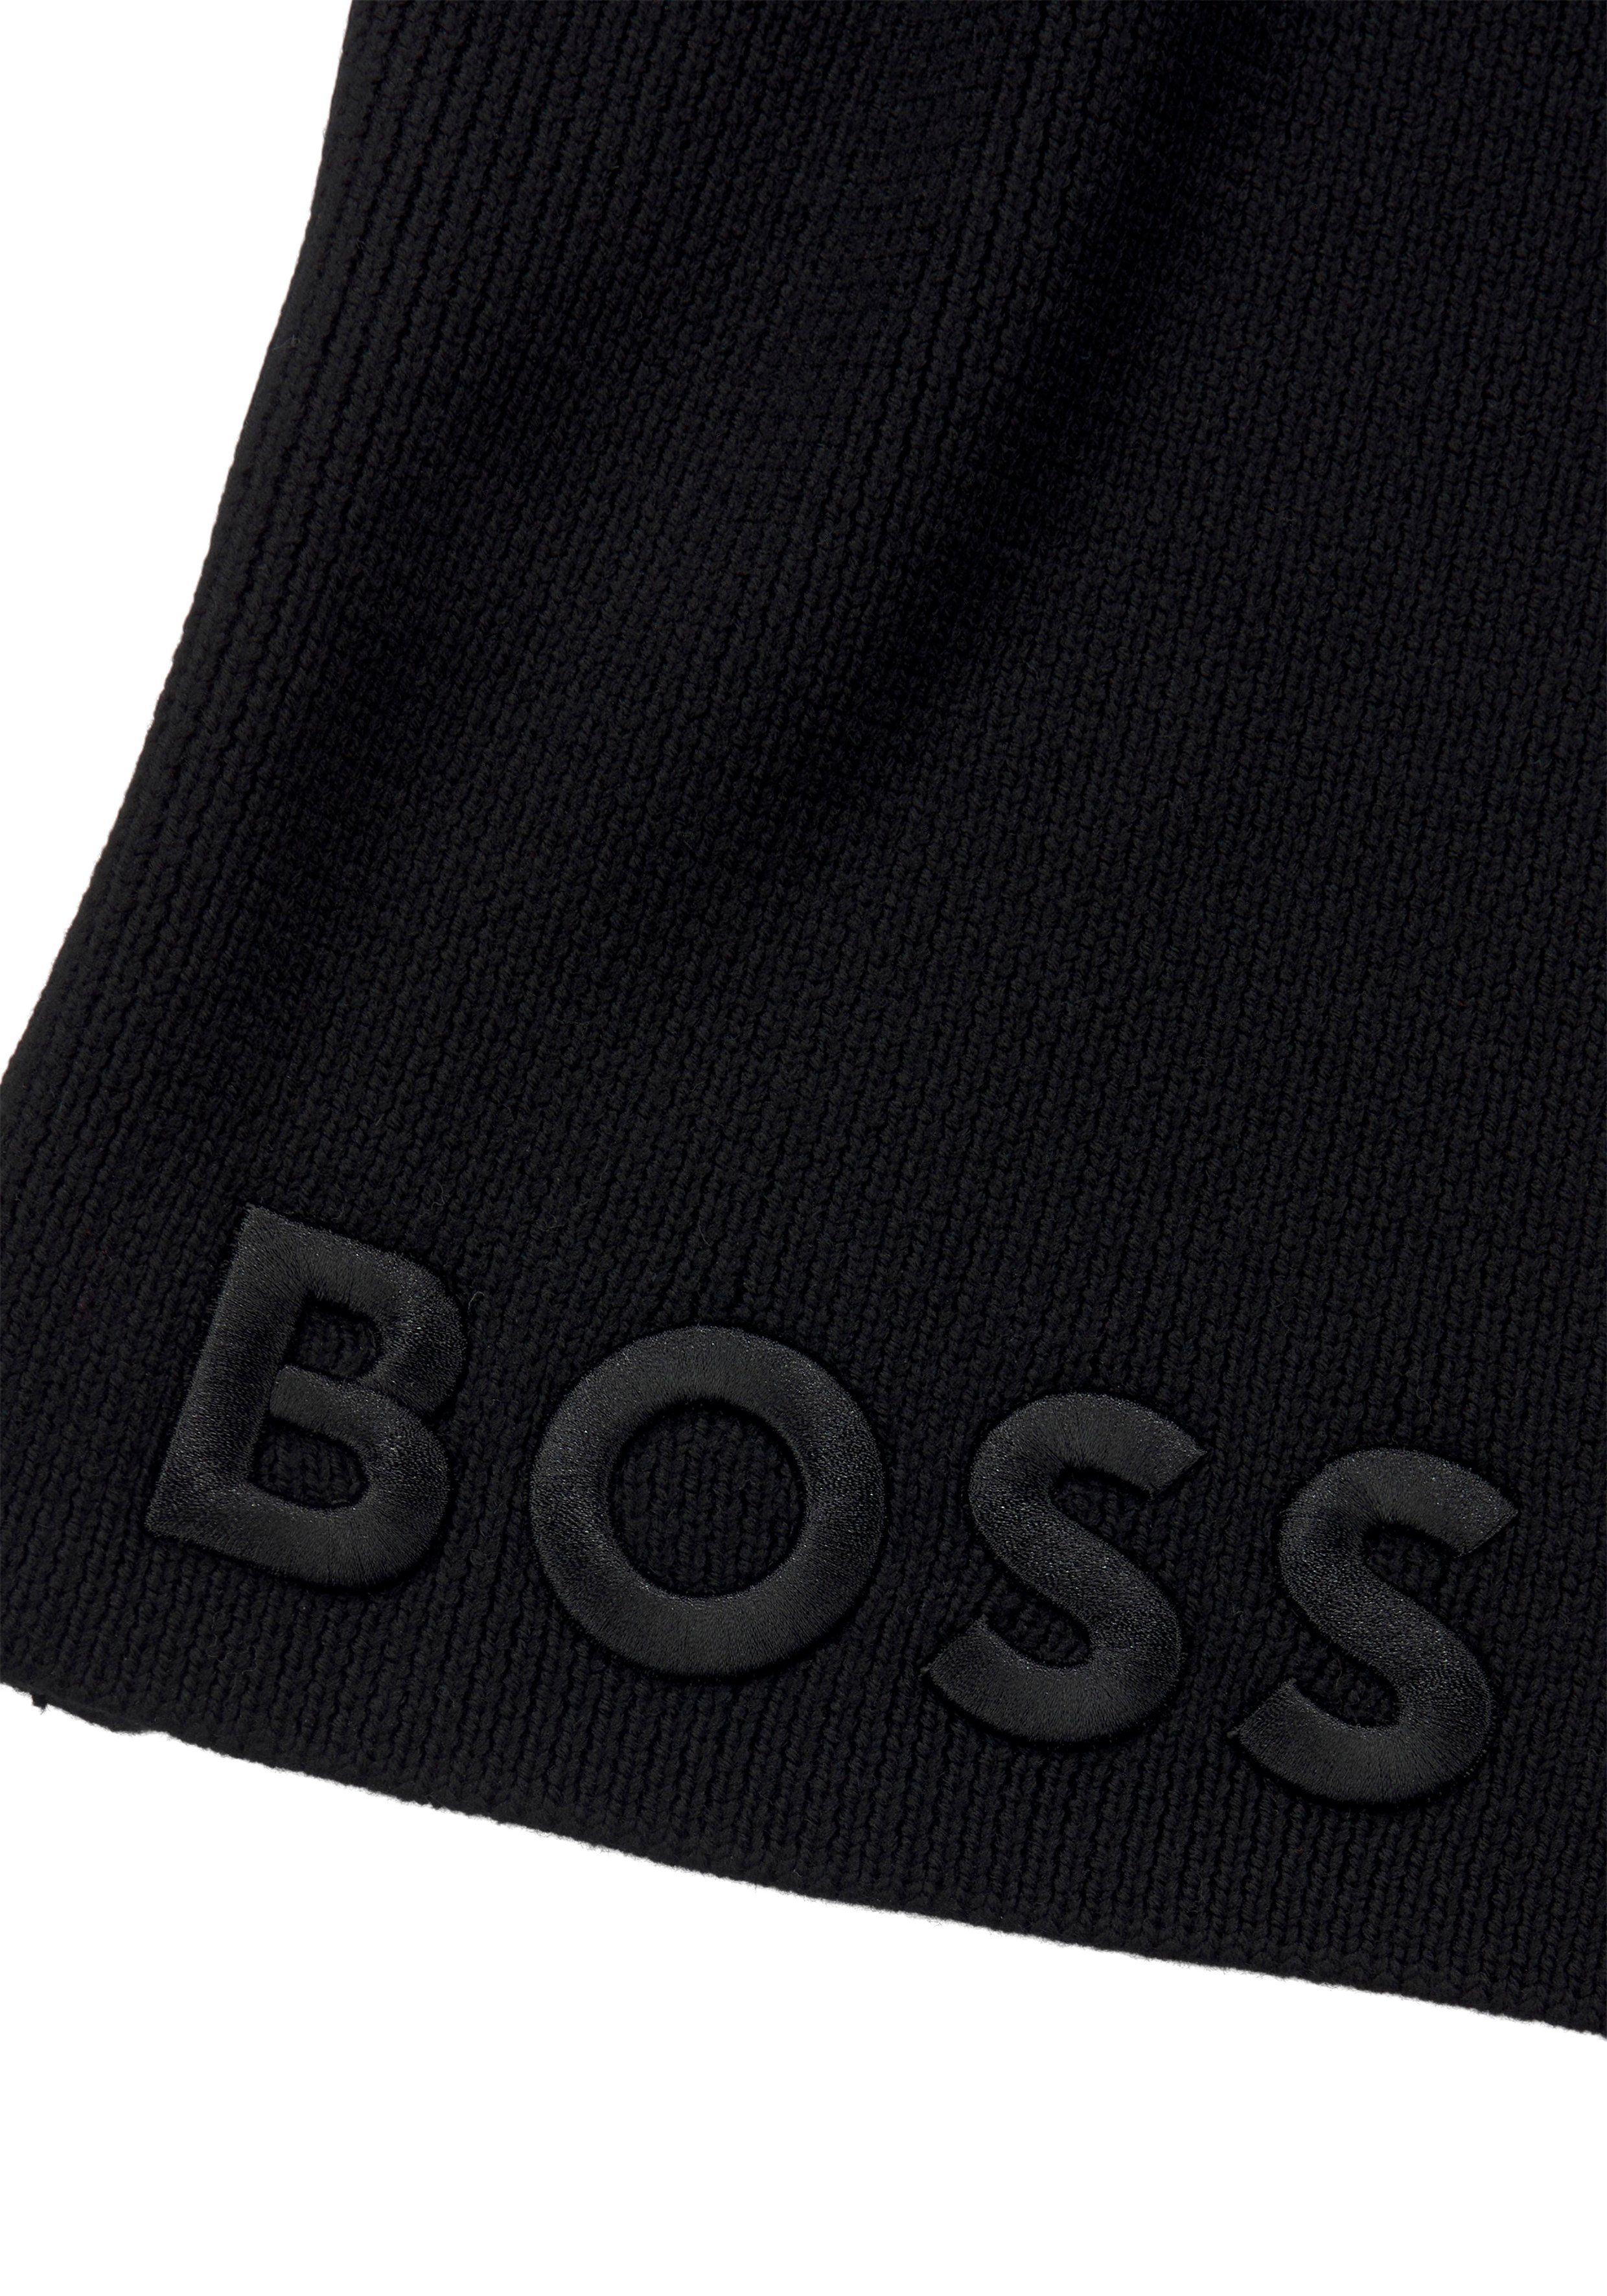 BOSS Lara_scarf, von Boss mit Schal Black Logo-Stickerei, Schal Womanswear tonaler BOSS